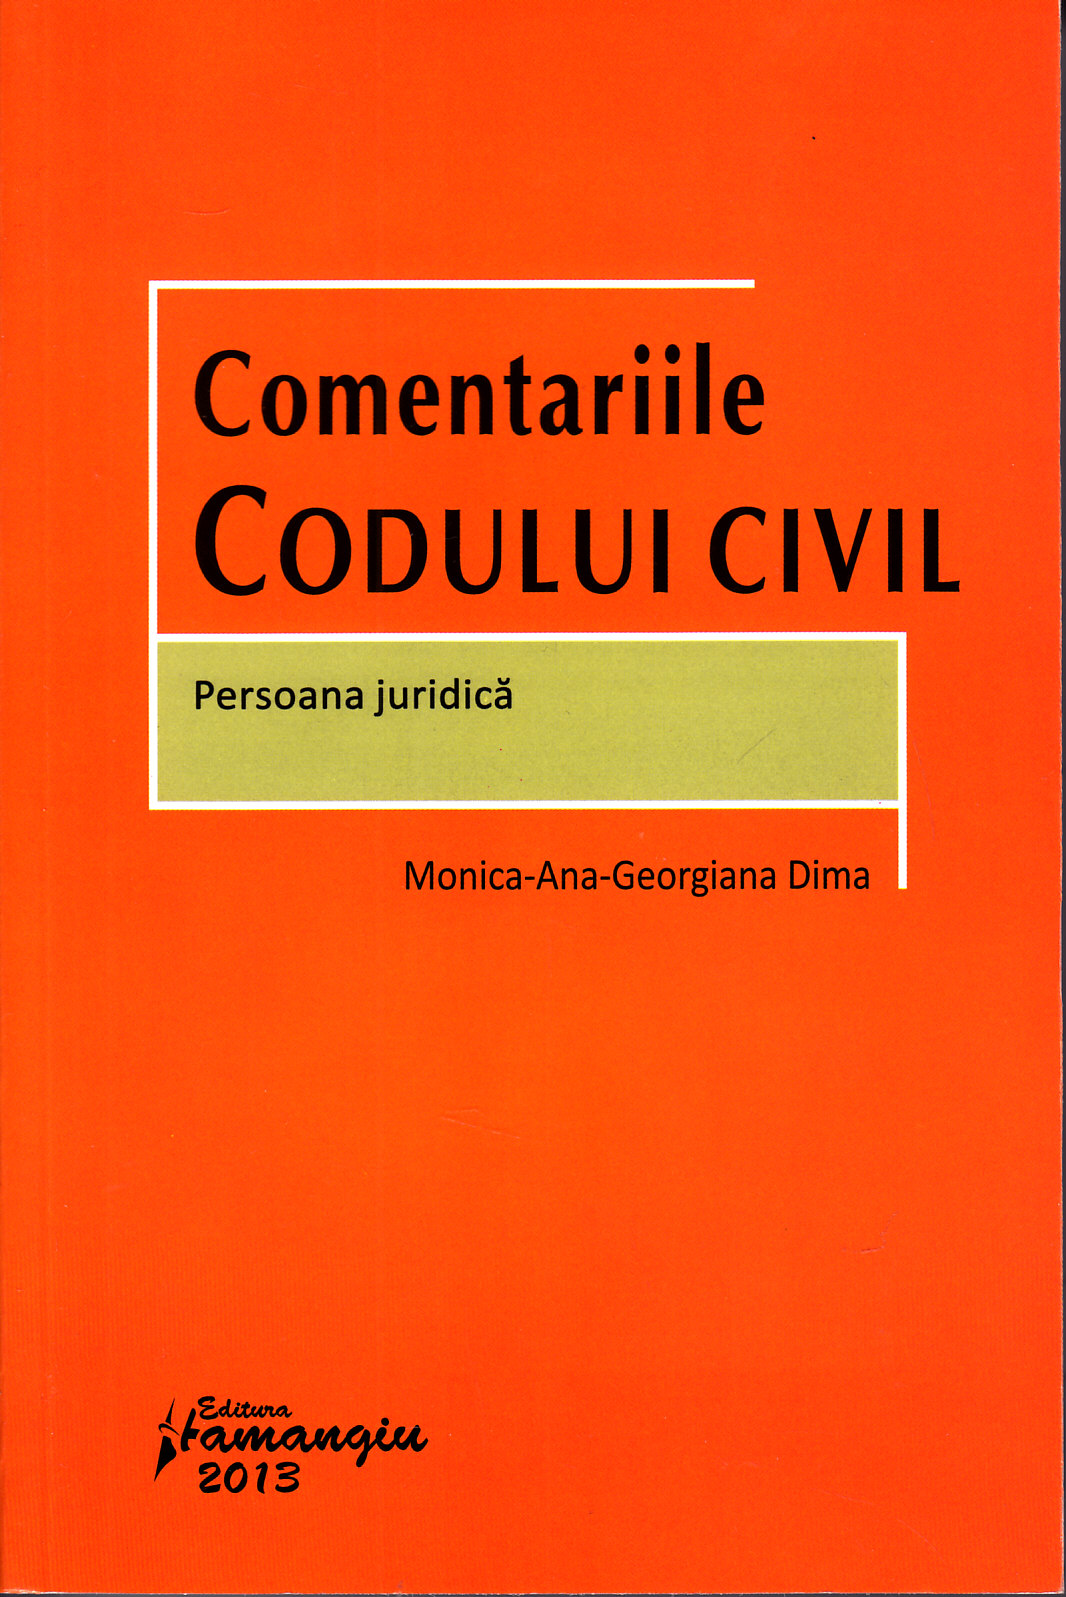 Comentariile codului civil. Persoana juridica - Monica-Ana-Georgiana Dima